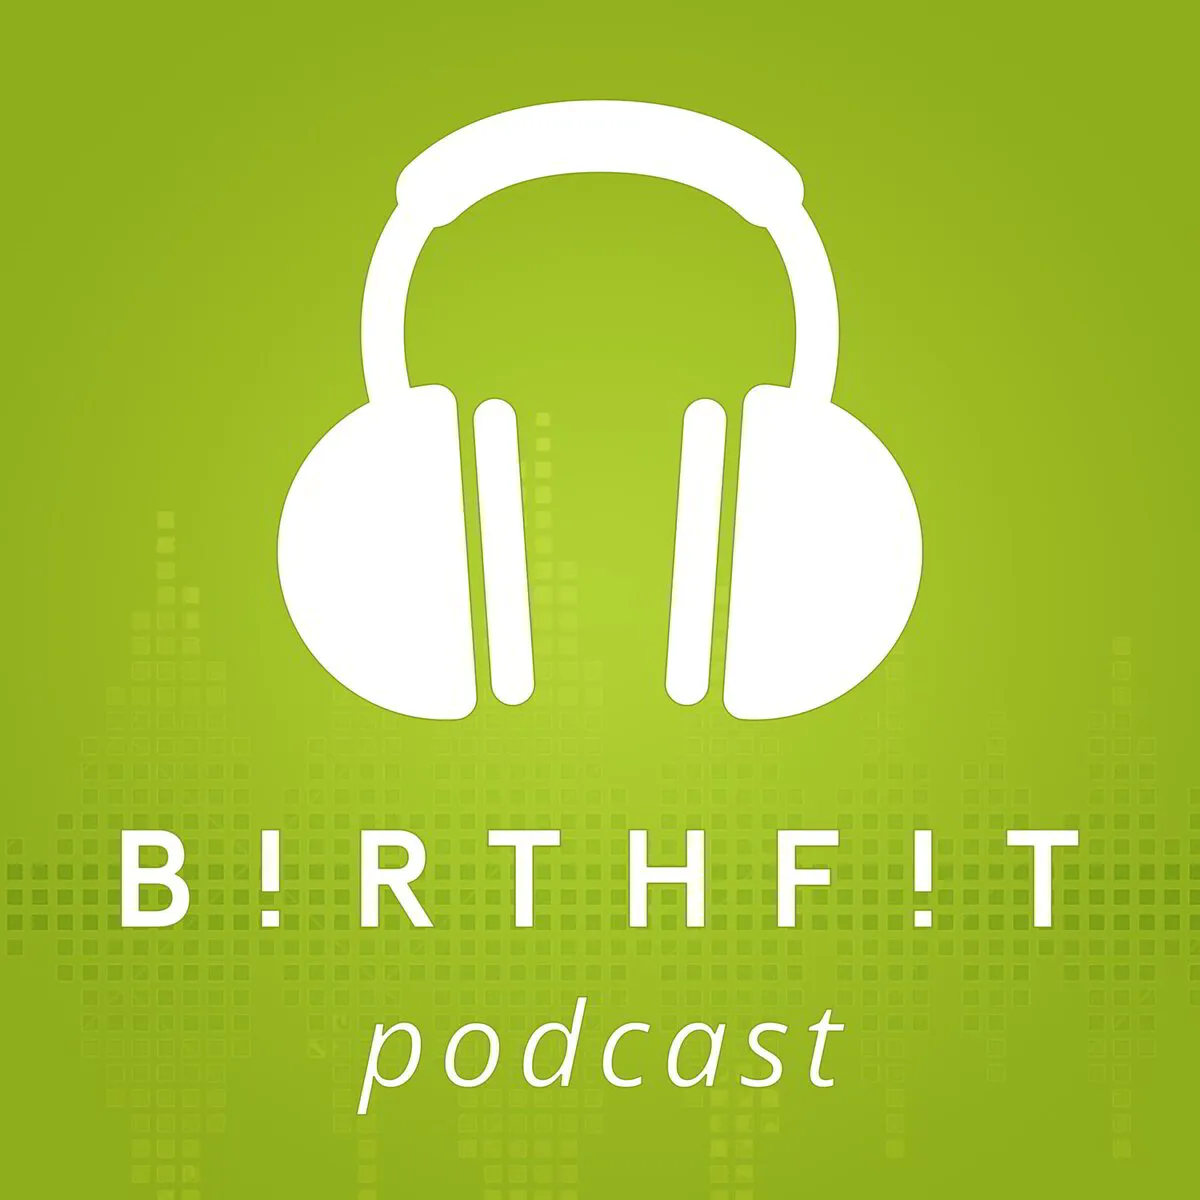 BIRTHFIT Podcast featuring Dr. Milo Chavira